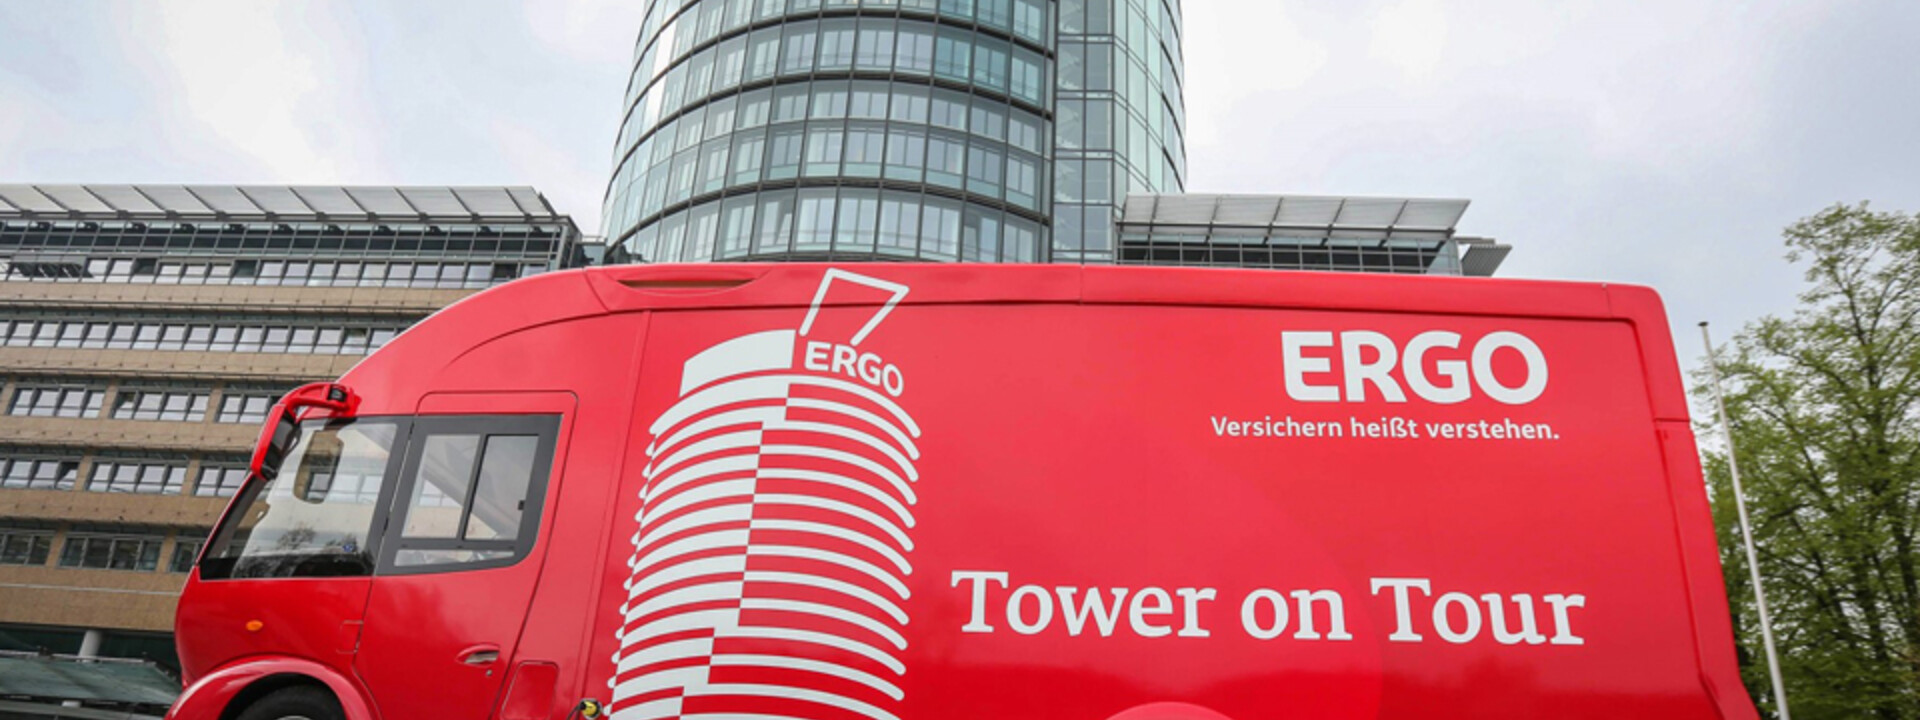 ergo-tower-on-tour-4-Infobus.jpg